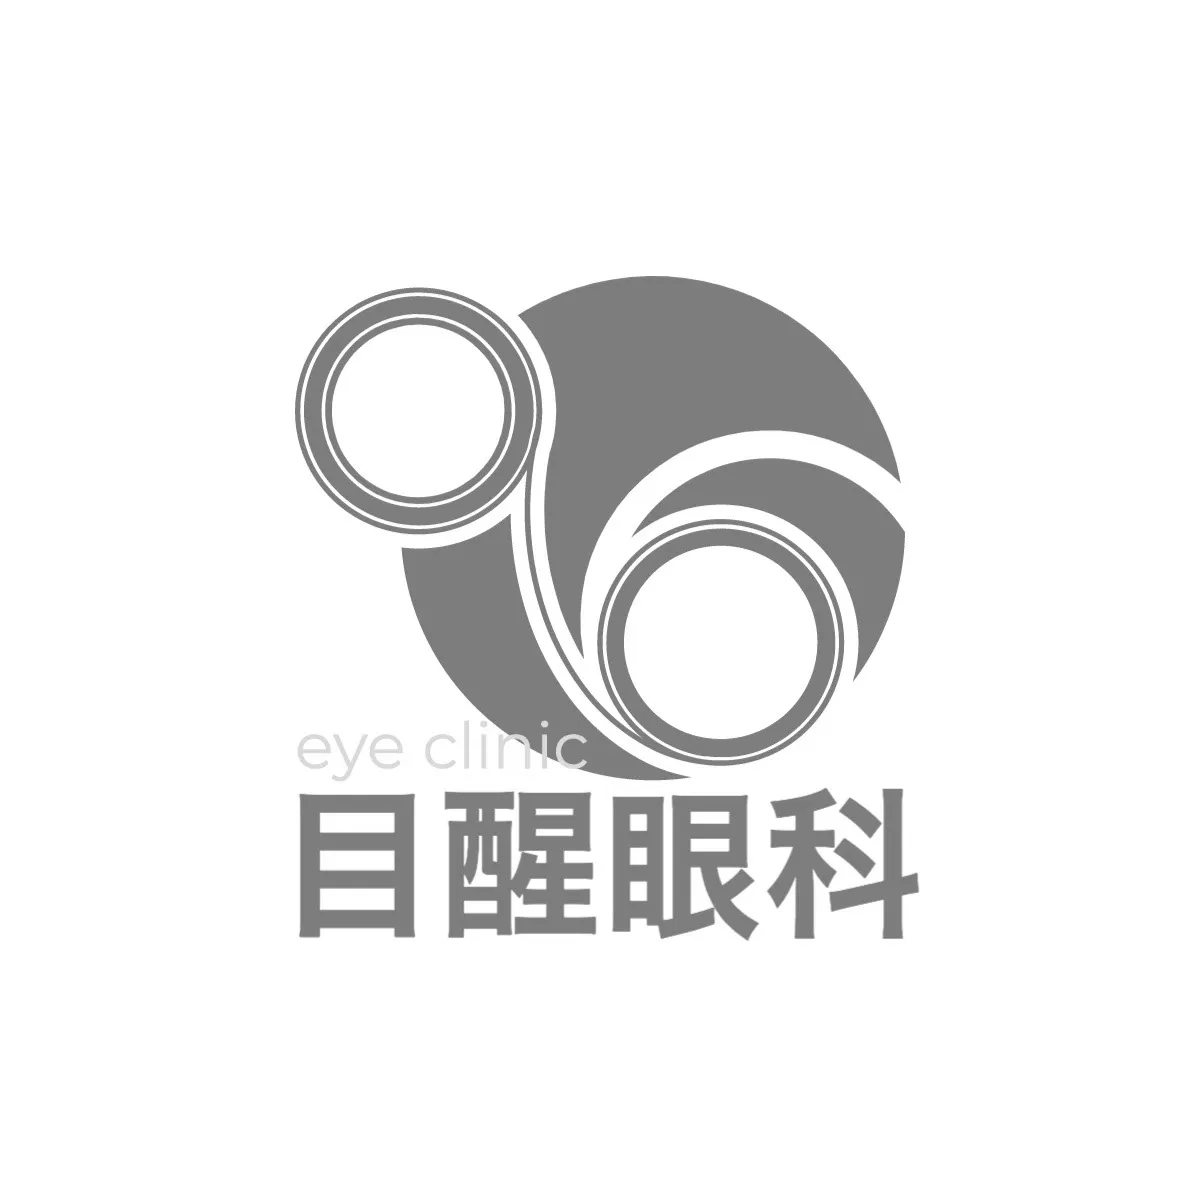 Eye clinic logo